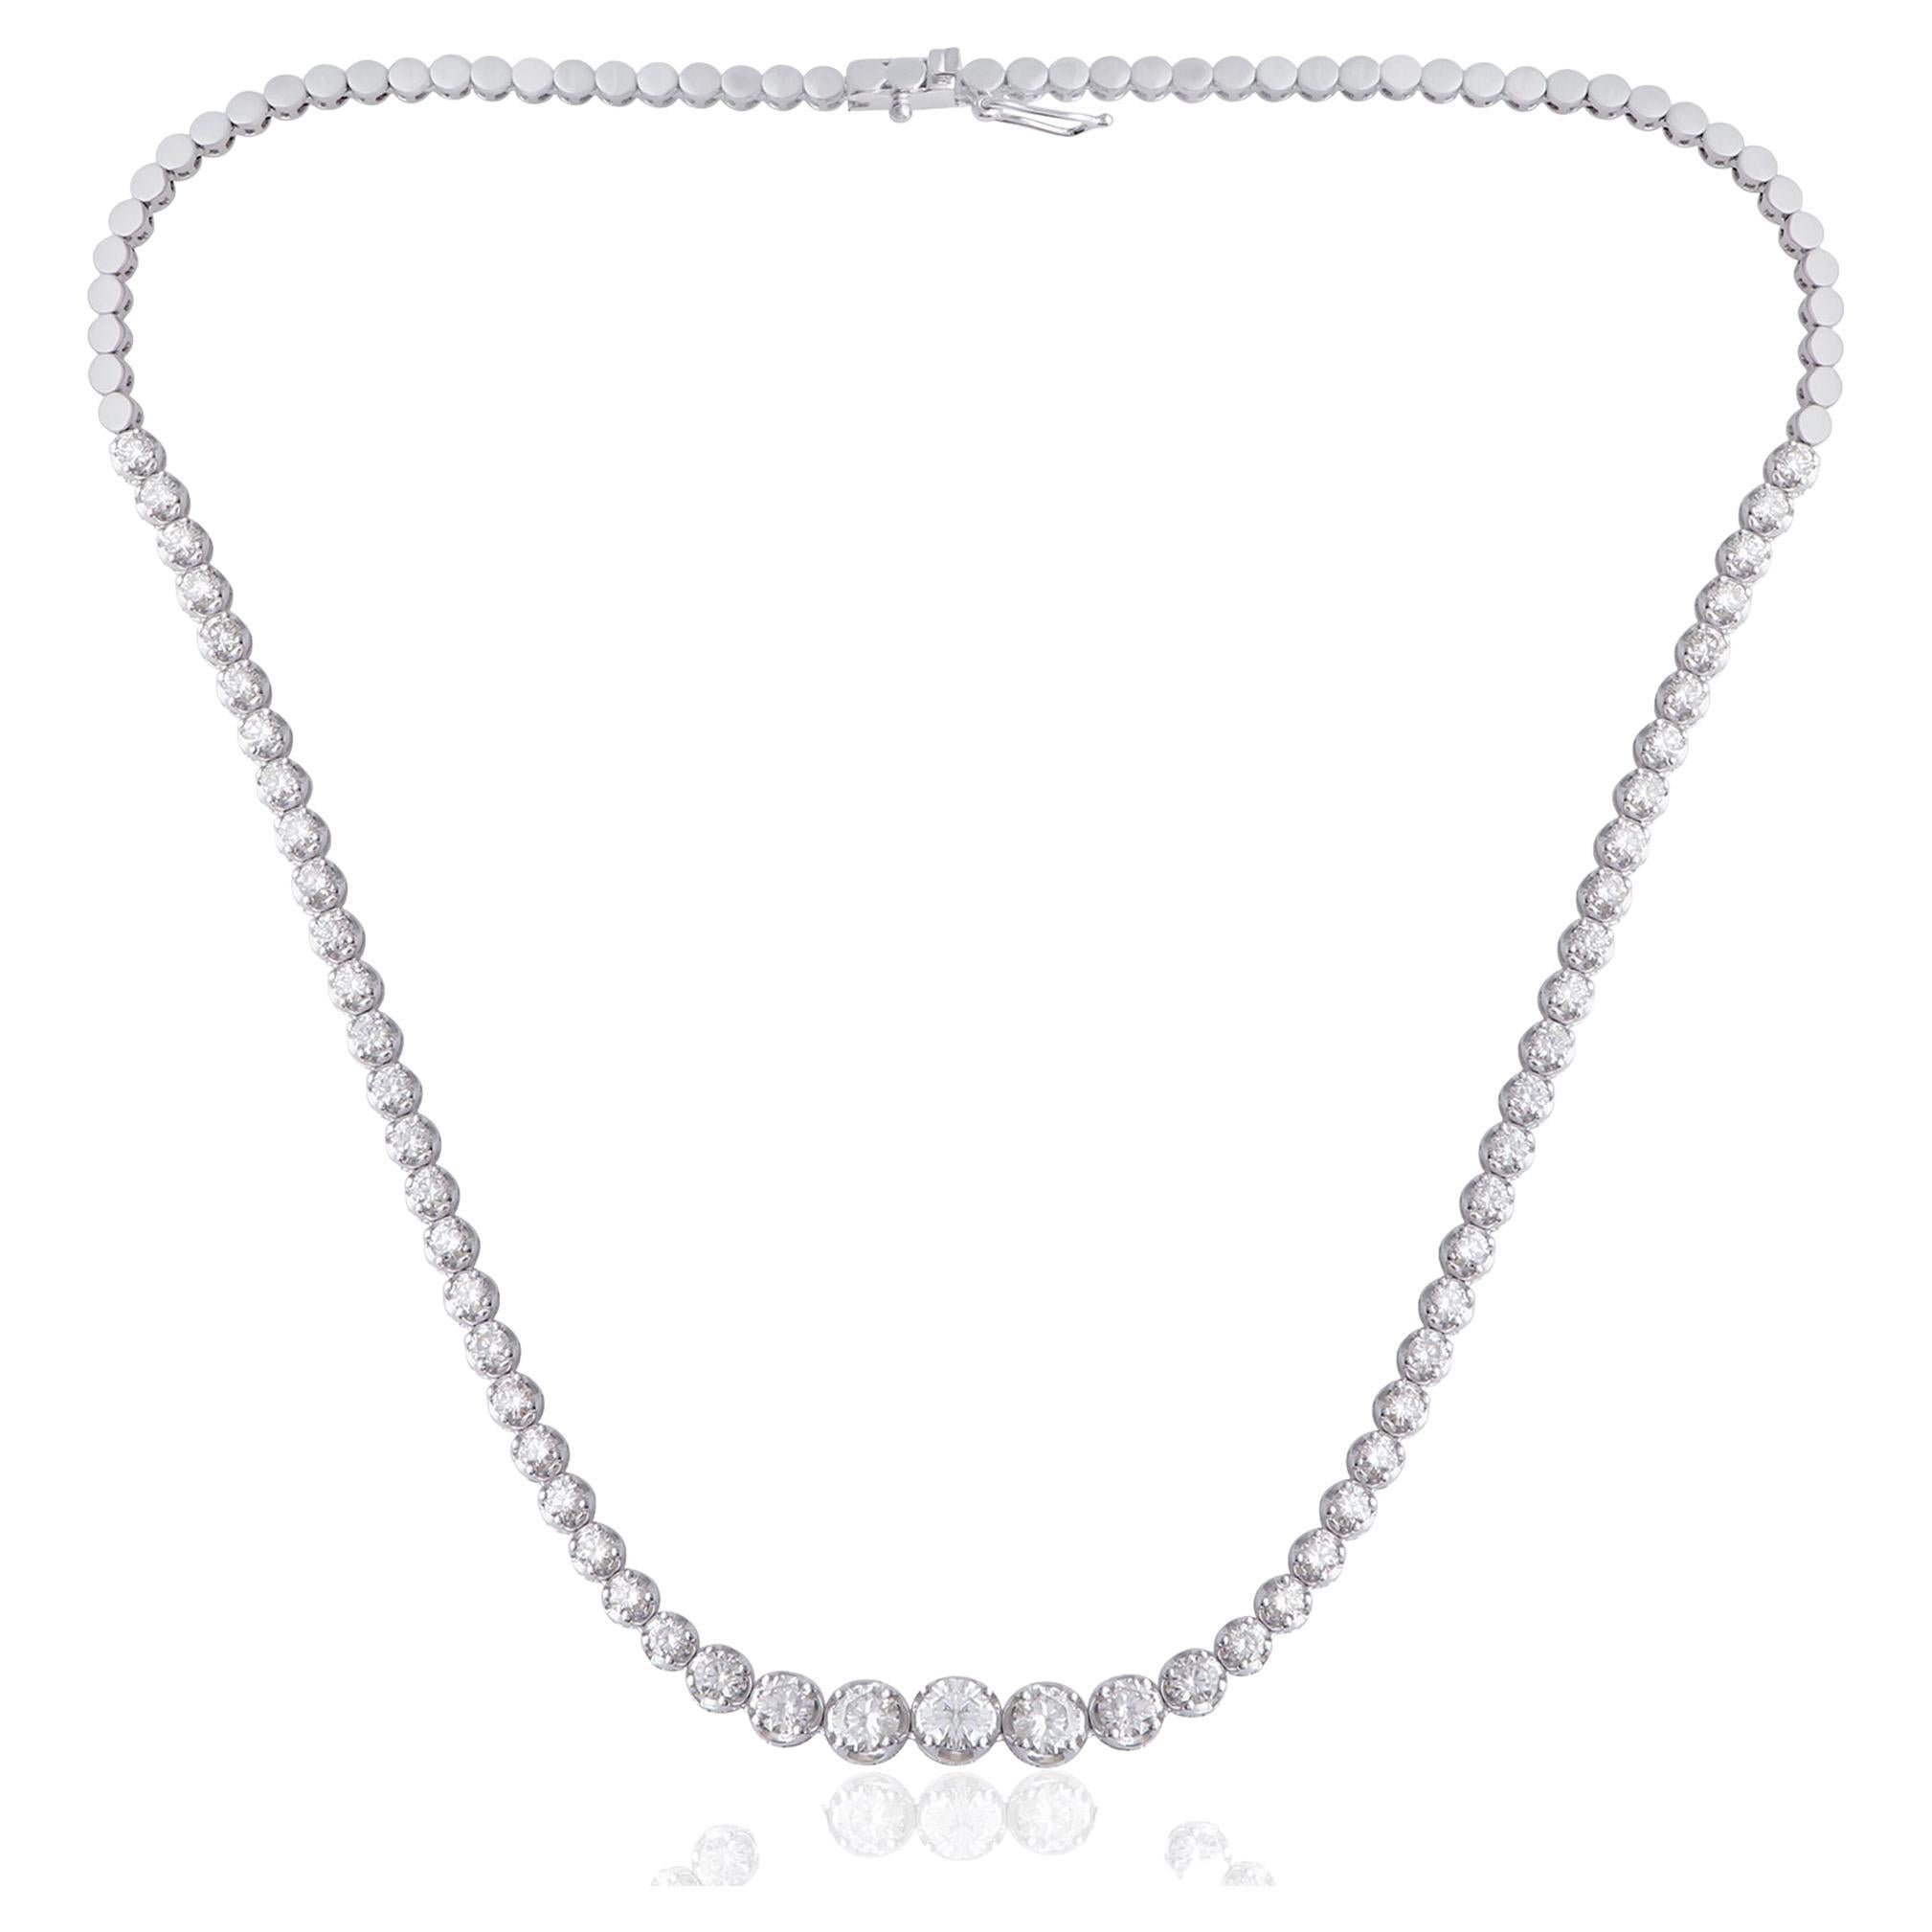 6.1 Carat SI Clarity HI Color Diamond Chain Necklace 18 Karat White Gold Jewelry